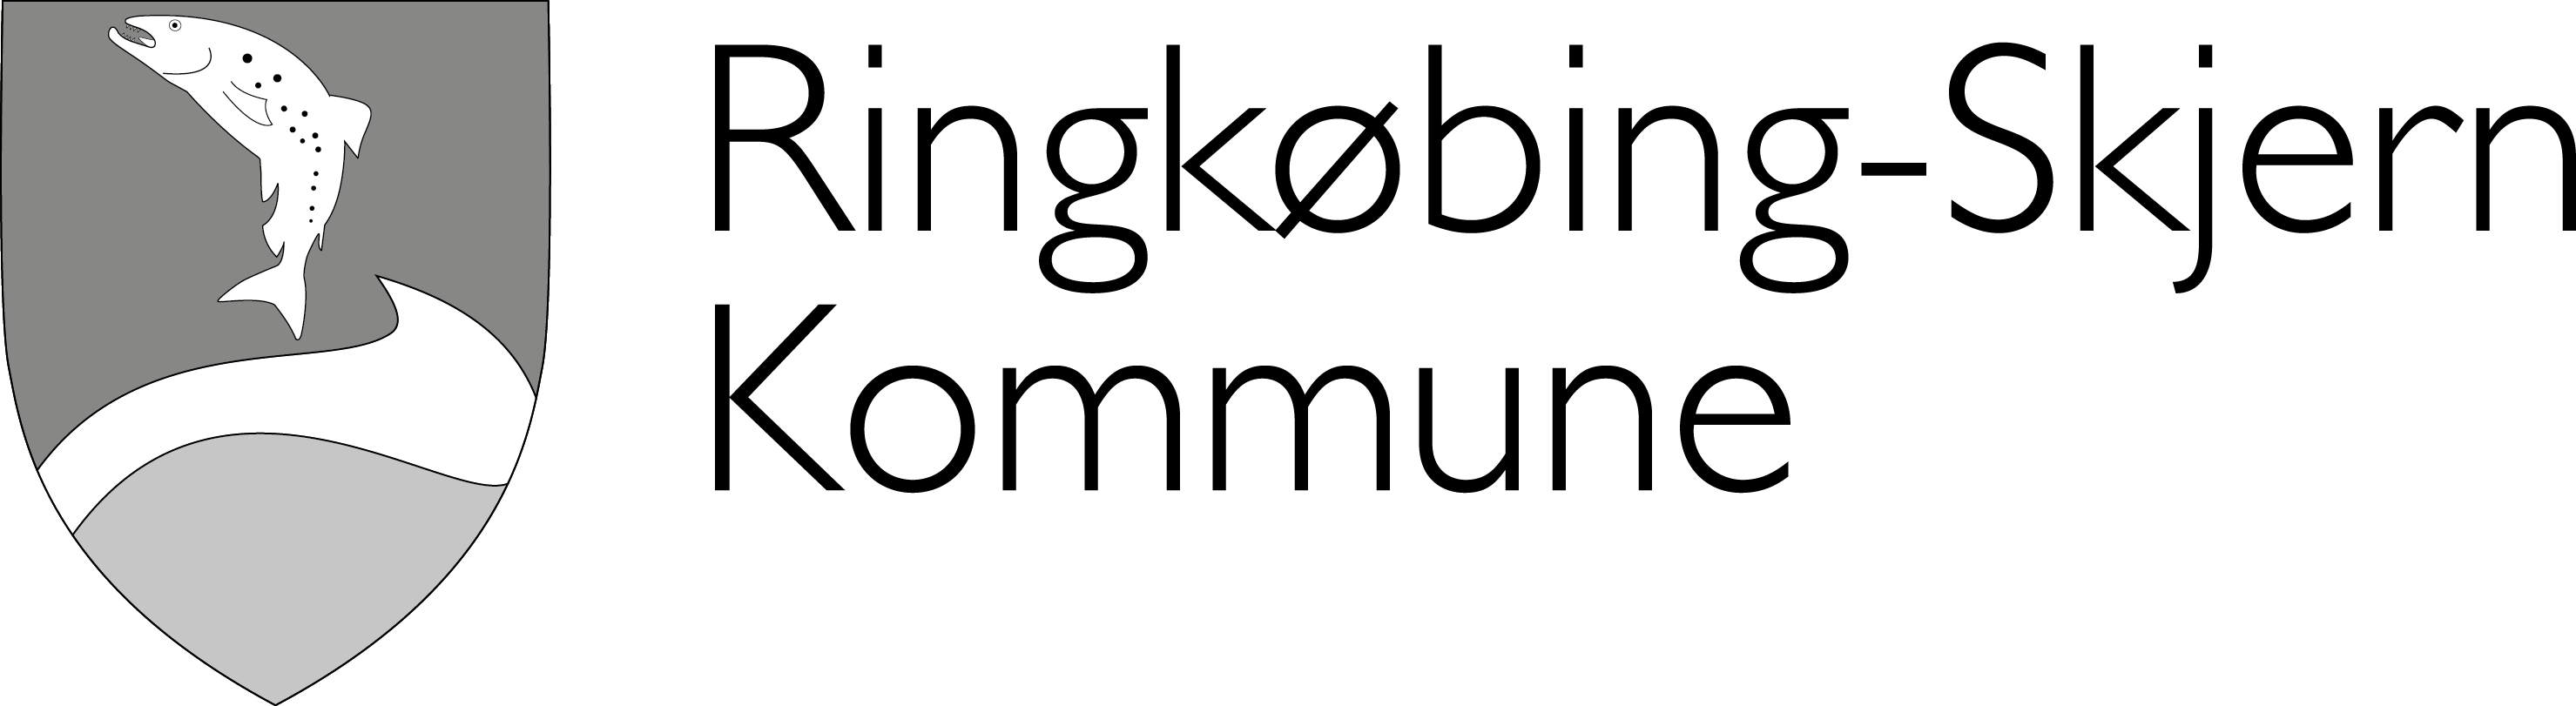 Logo sort/hvid